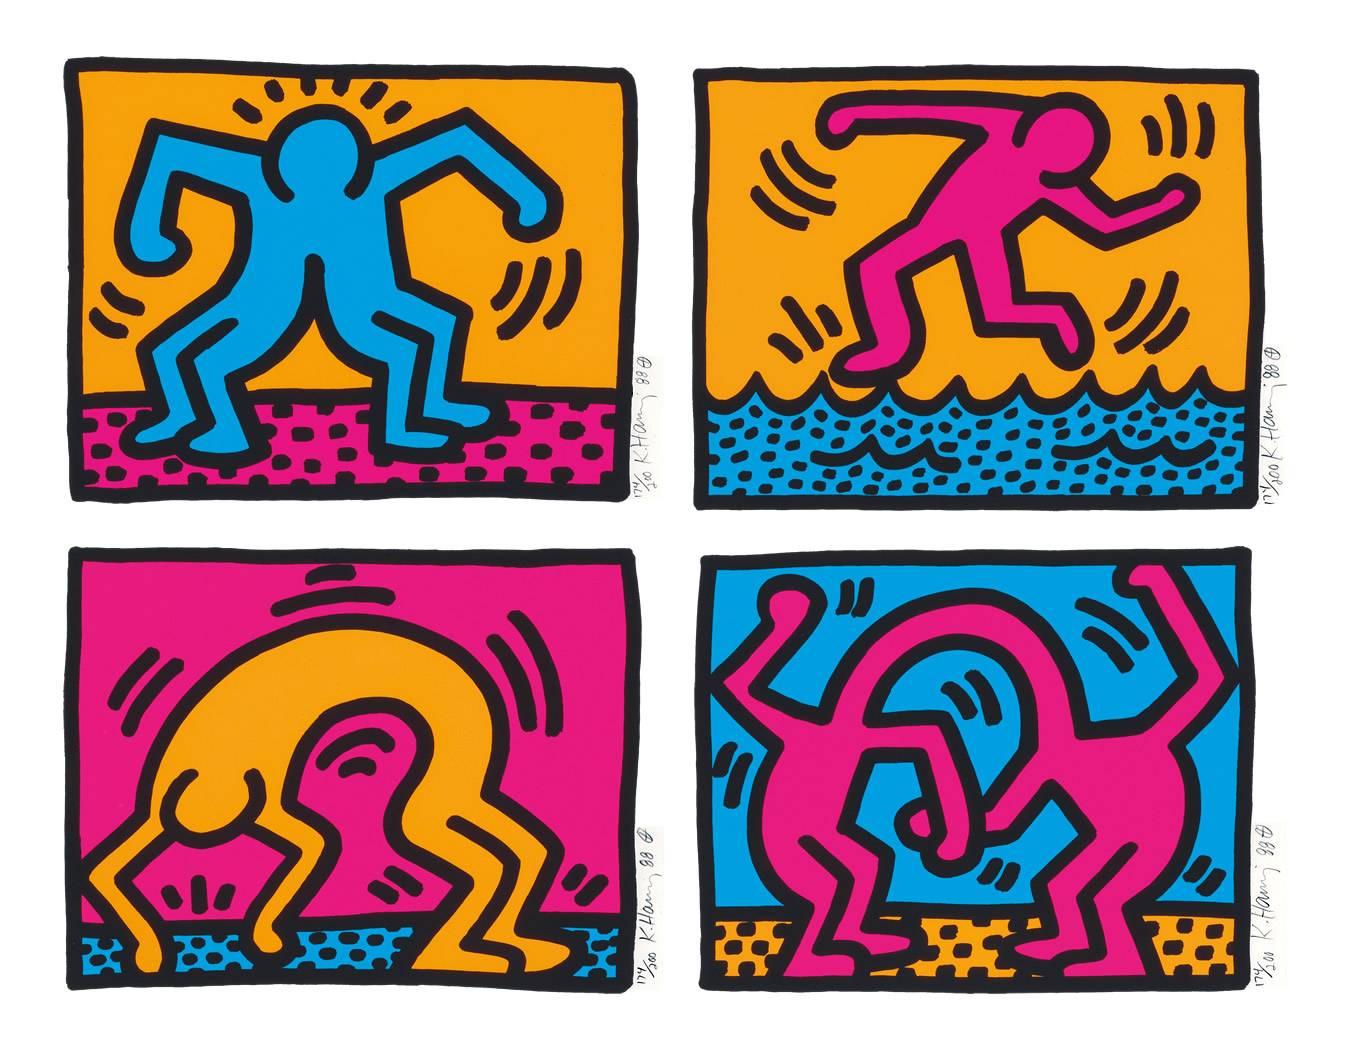 Keith Haring Figurative Print - Pop Shop II, Complete Portfolio 4 pieces